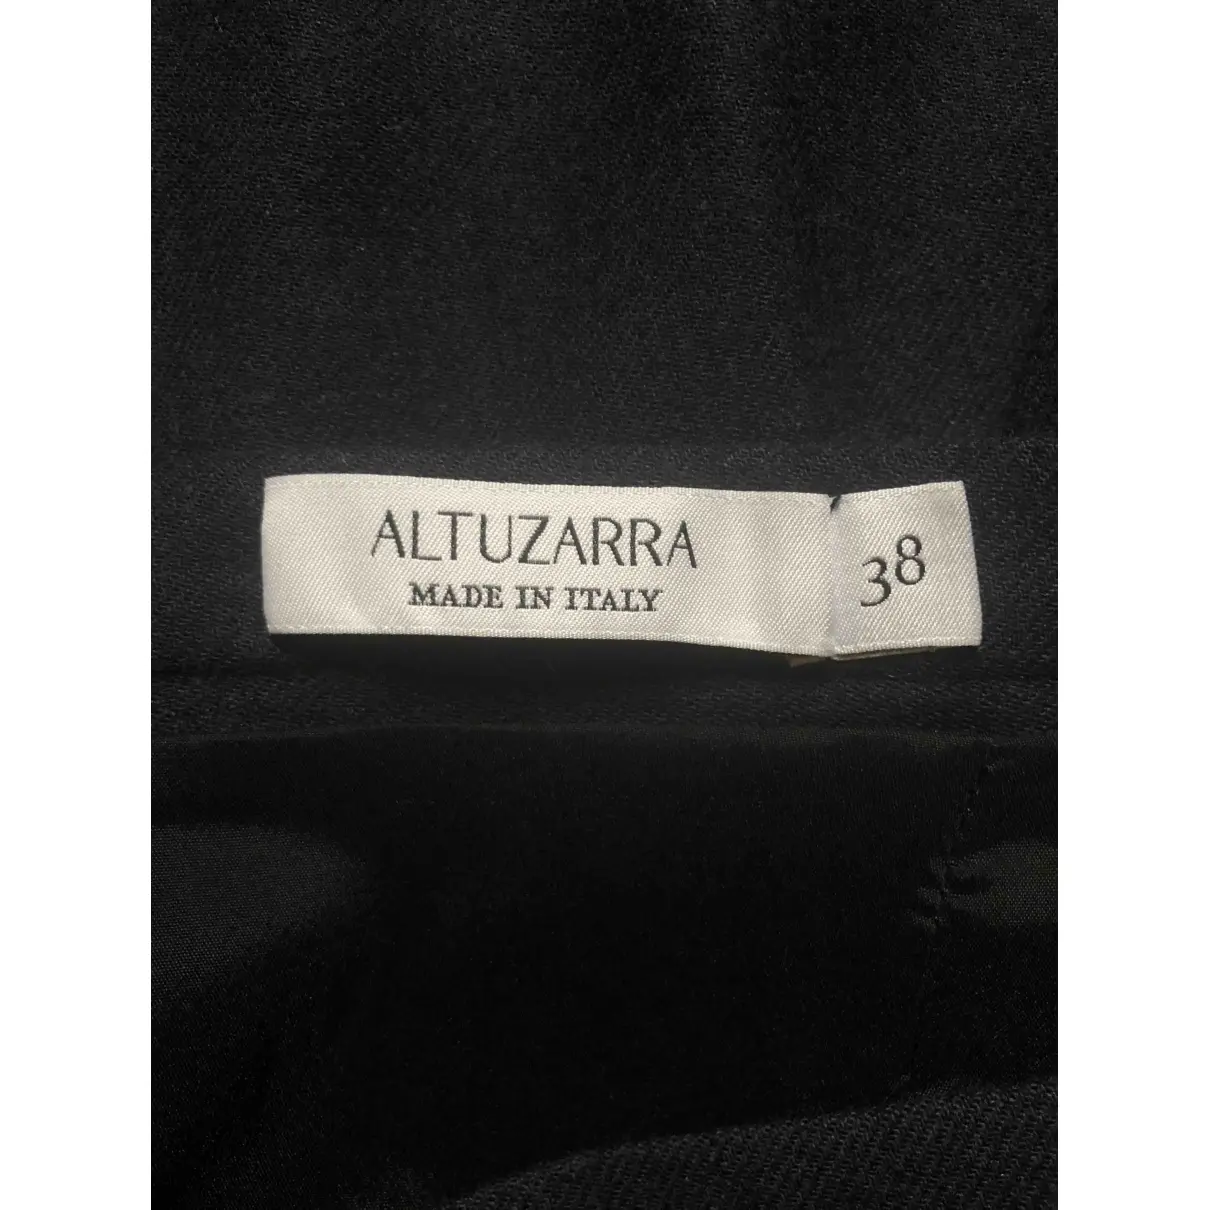 Buy Altuzarra Wool mid-length skirt online